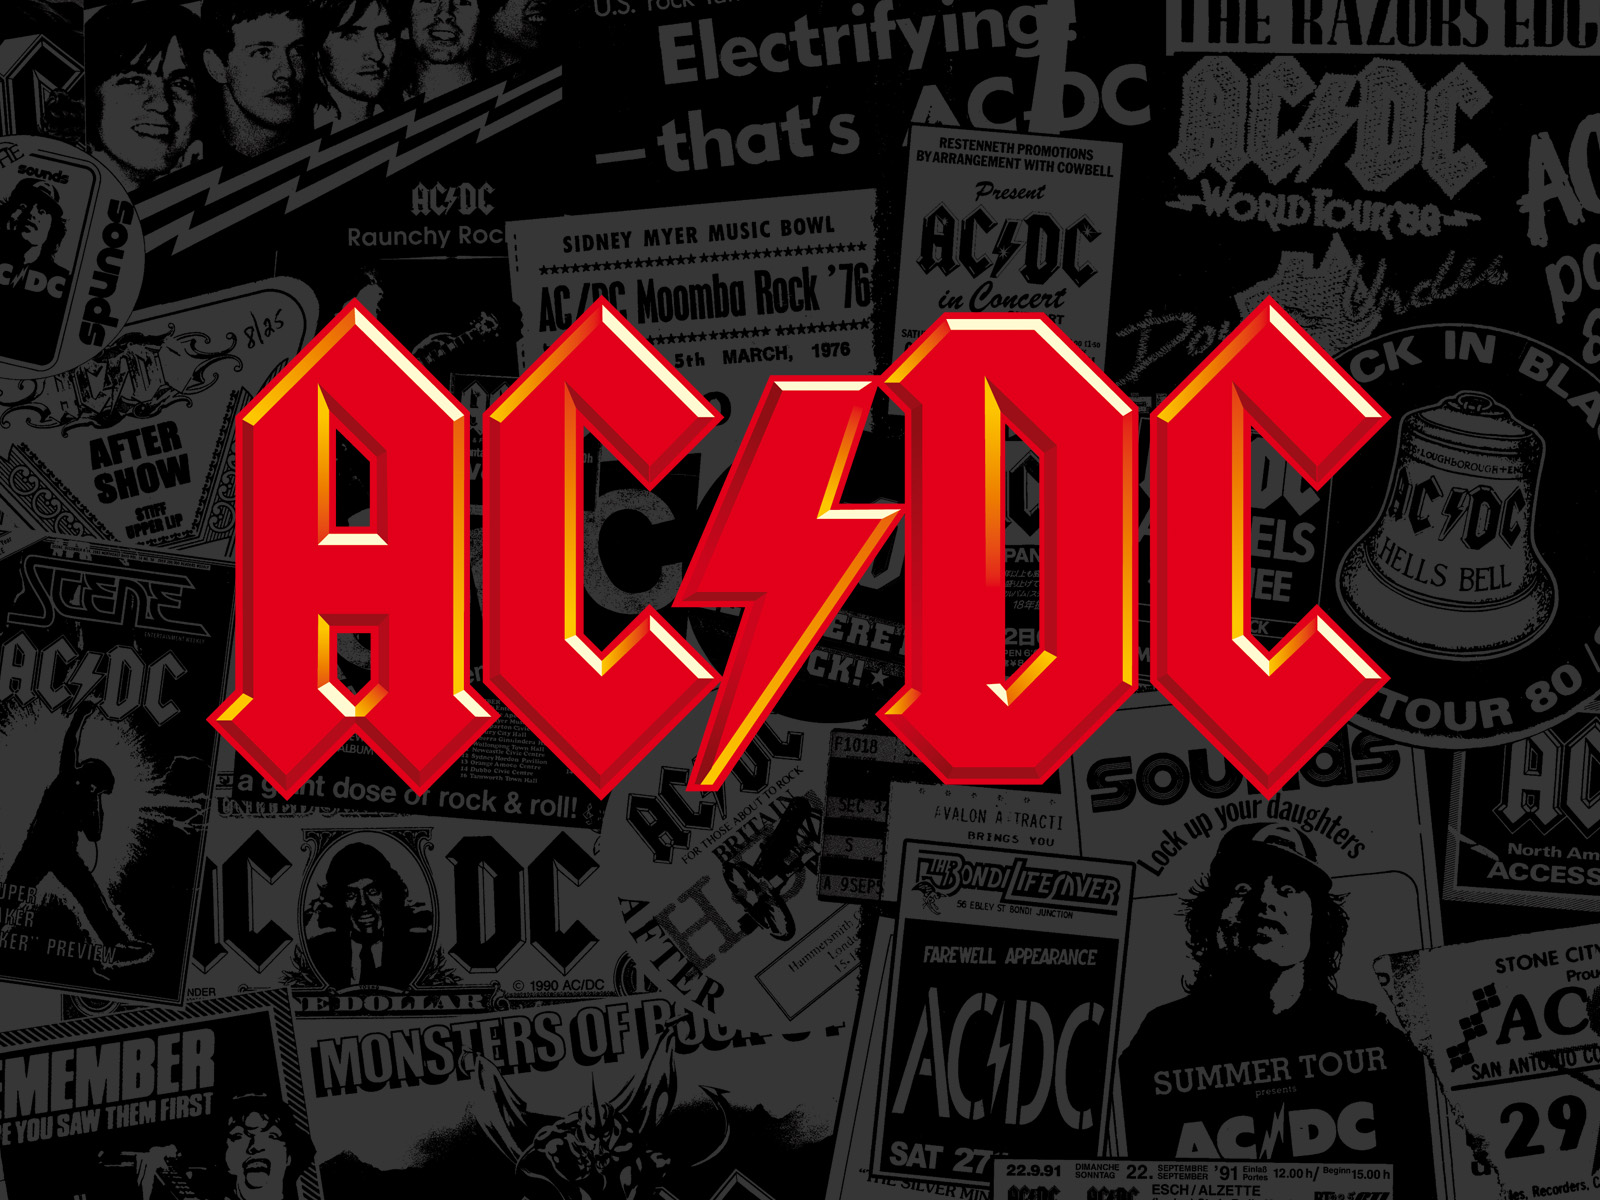 ac-dc-australian-rock-band-logo-hd-wallpaper-walls-9